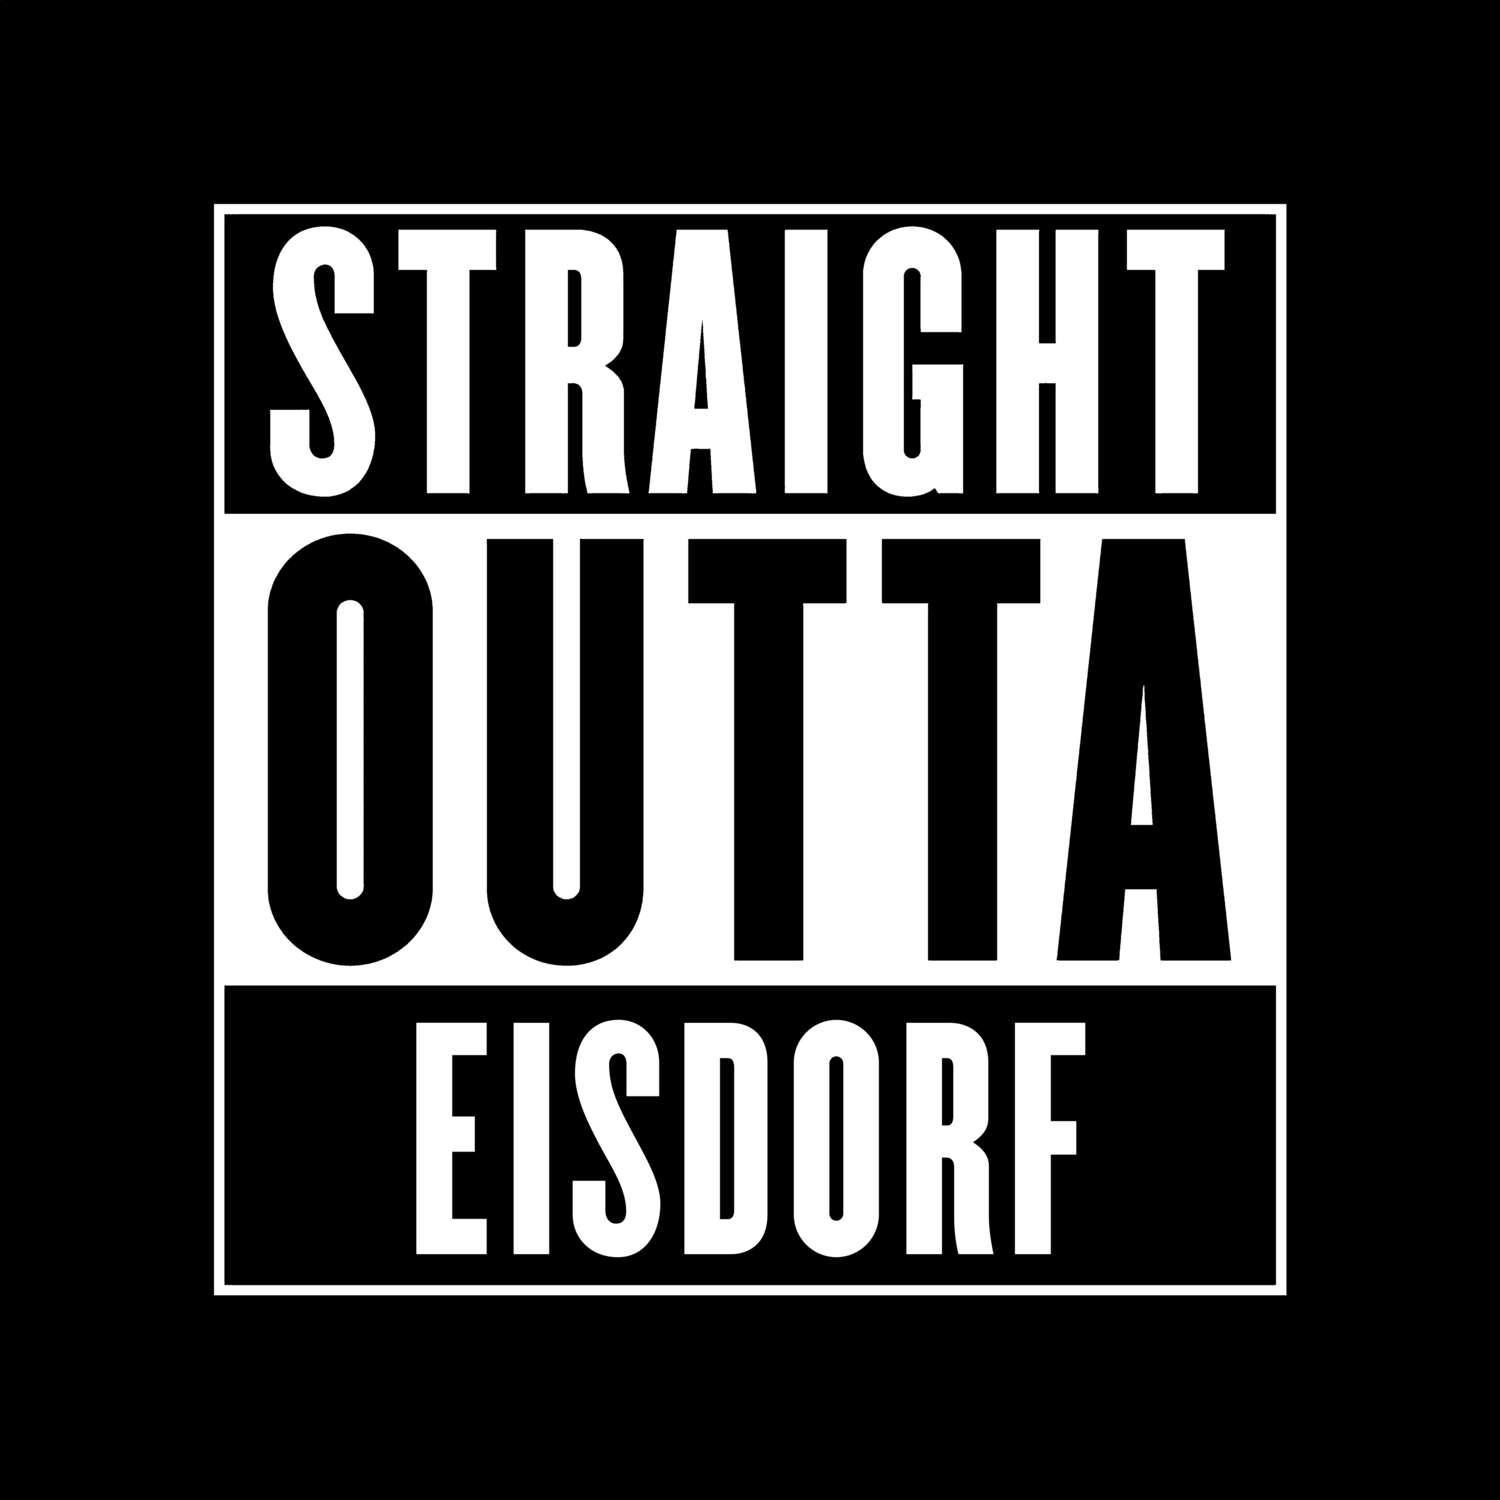 Eisdorf T-Shirt »Straight Outta«